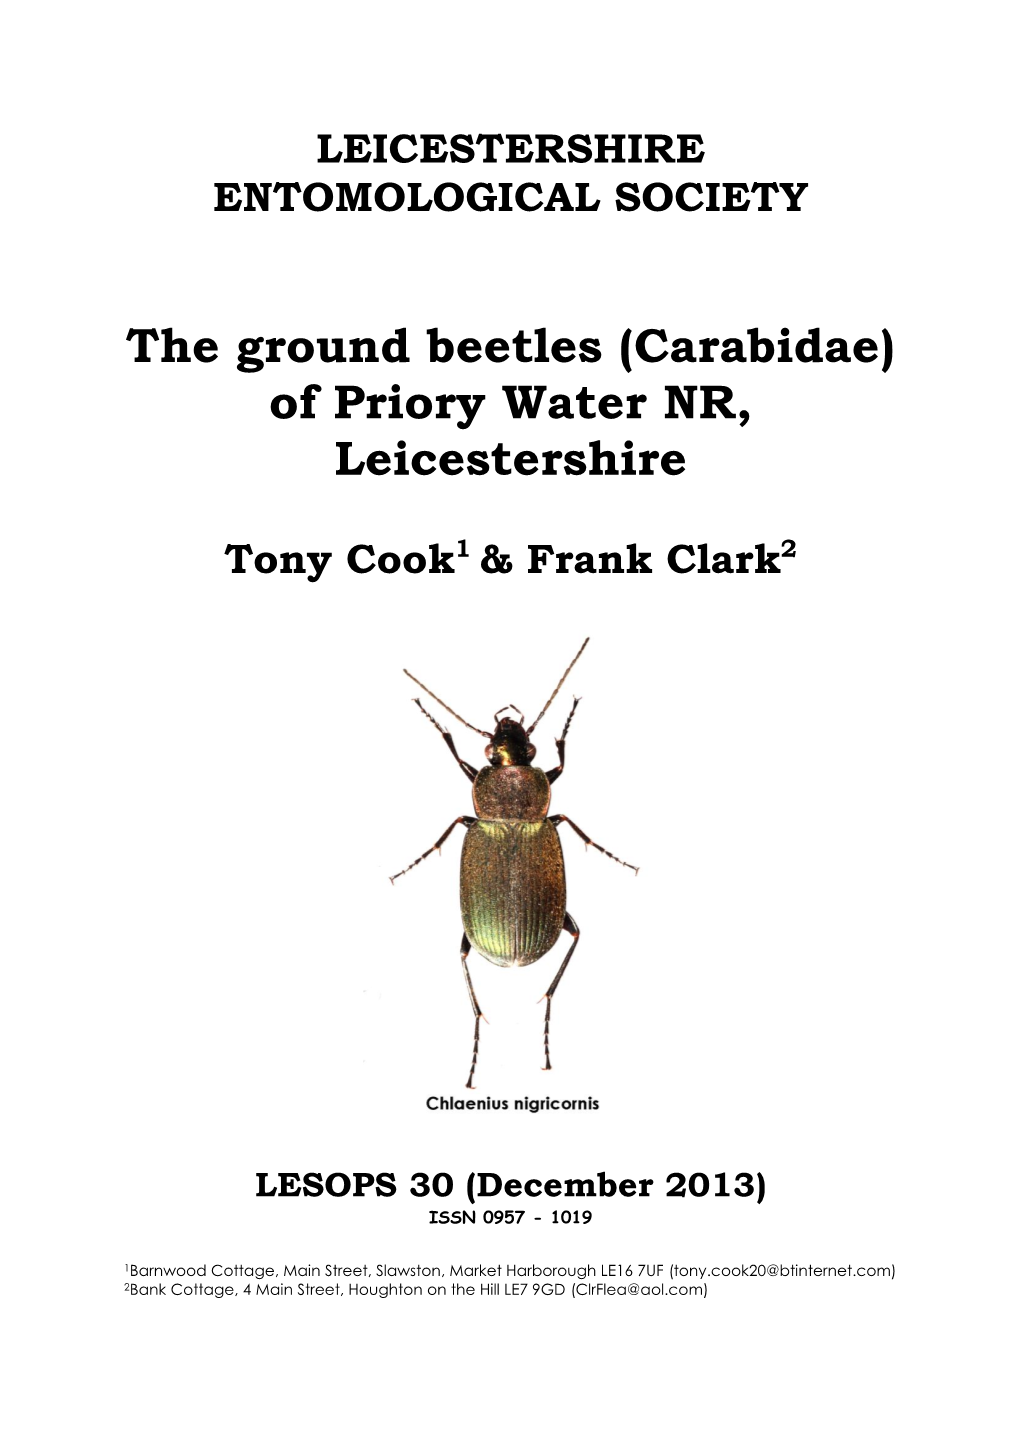 The Ground Beetles (Carabidae) of Priory Water NR, Leicestershire